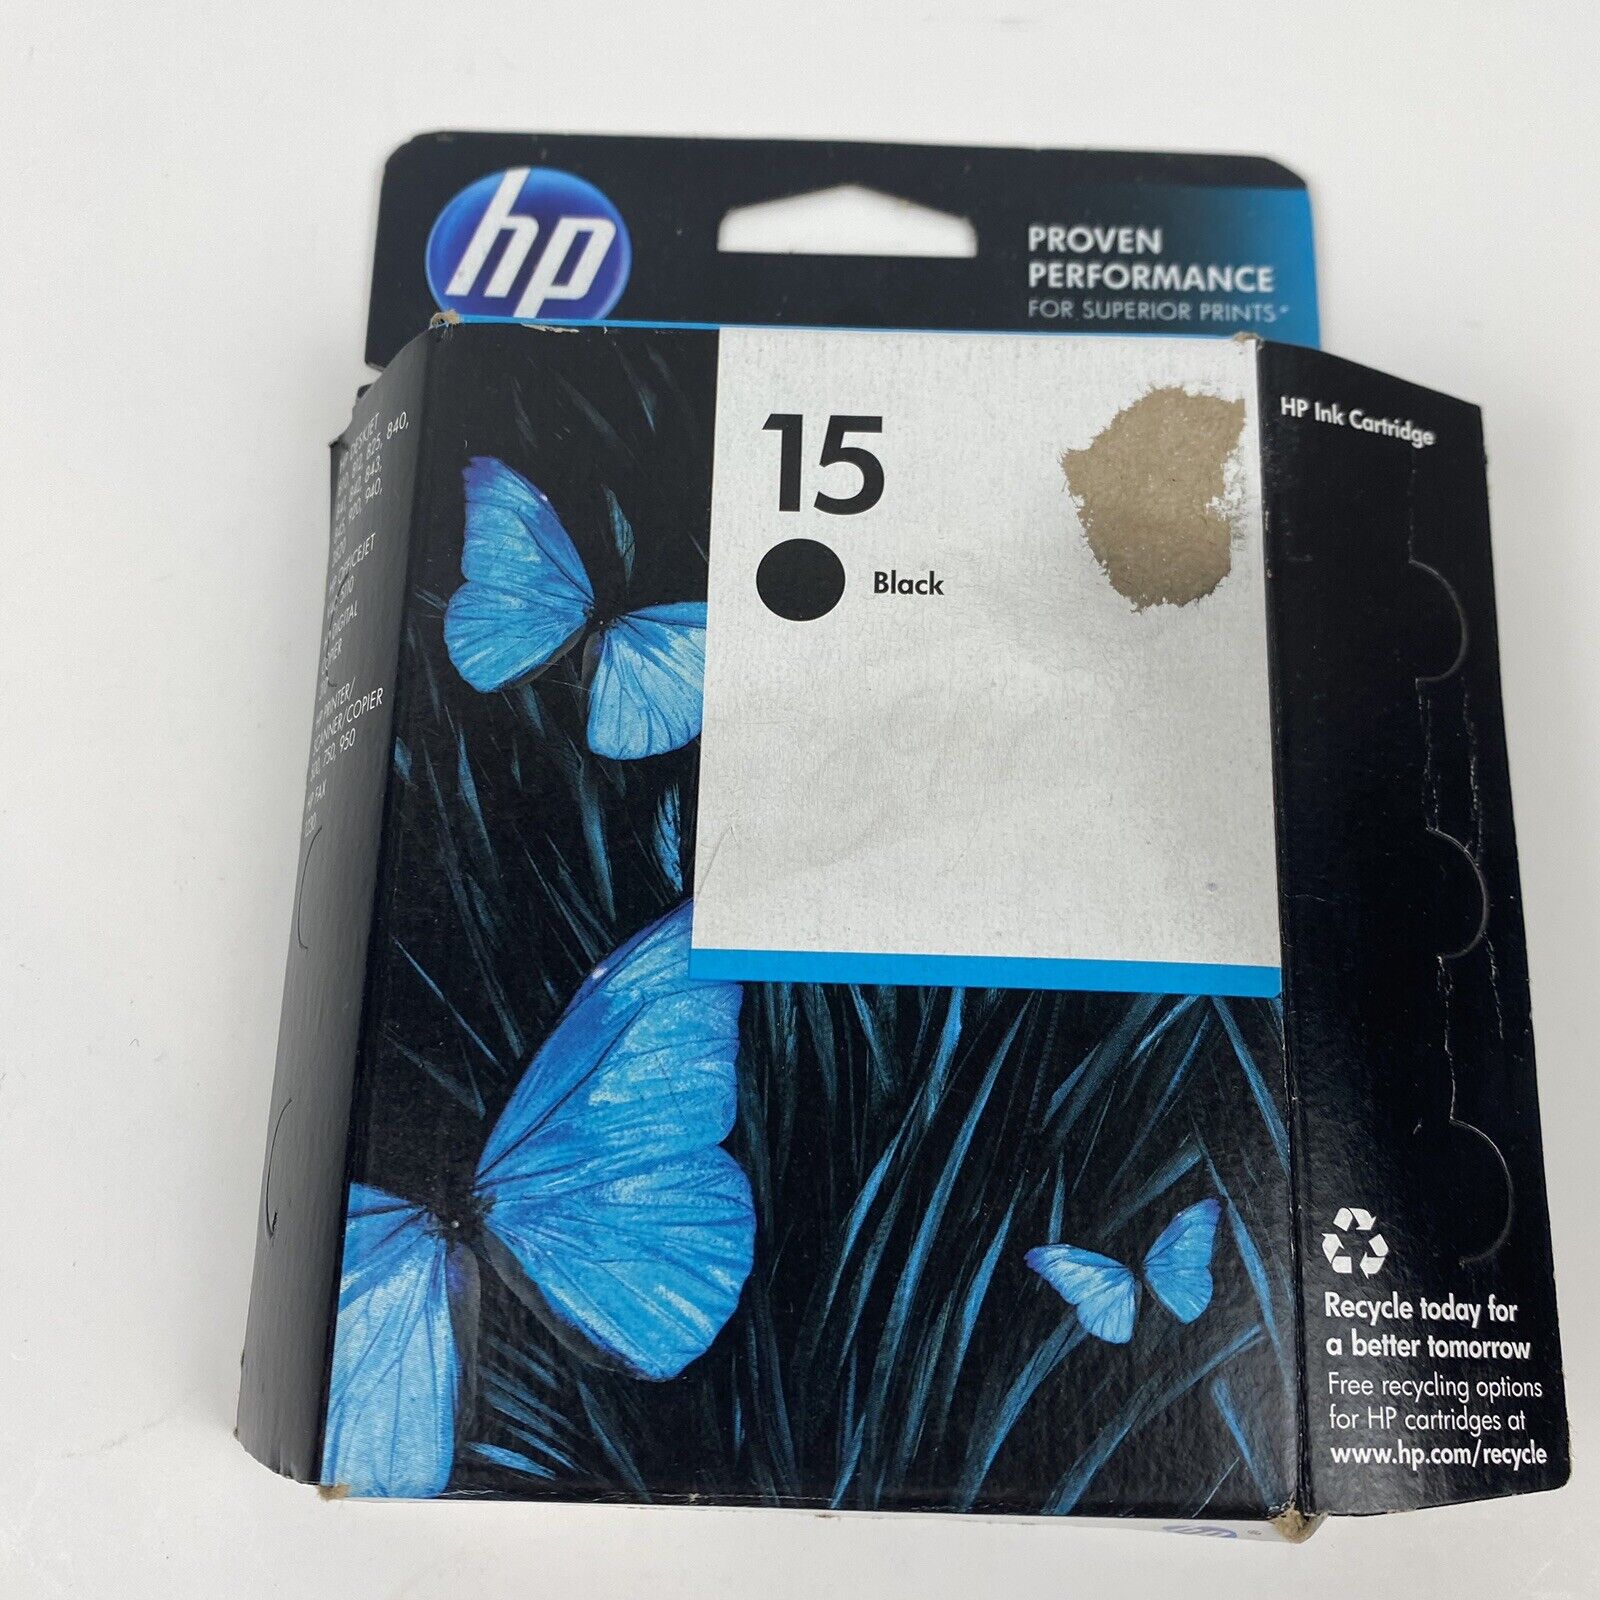 New Genuine HP 15 Black Ink Cartridge Box Exp 05/2015 - Open Box Sealed